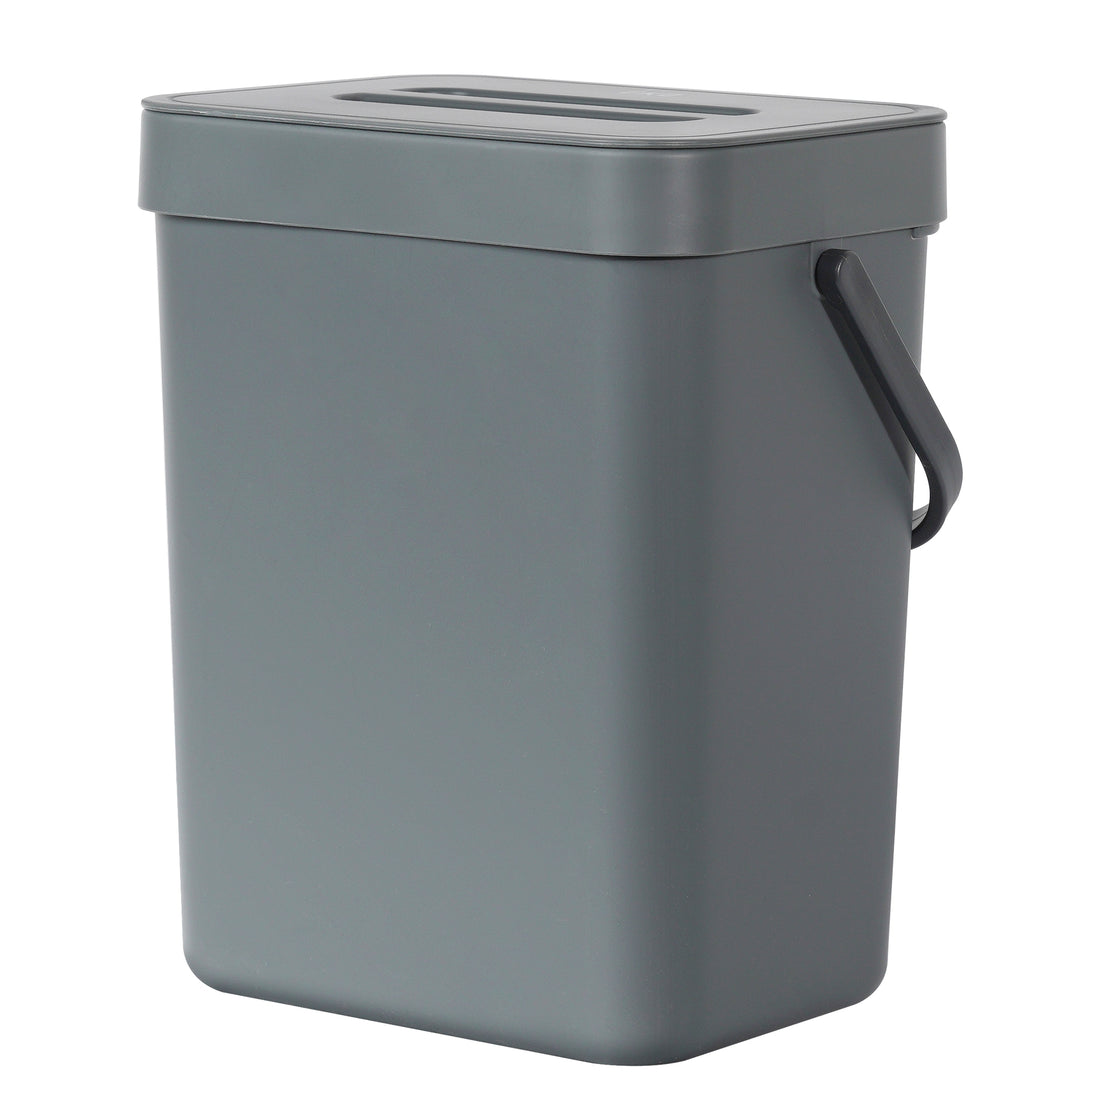 Puro Compost Bin with Lid - Dark Grey 5L / 1.32 Gal